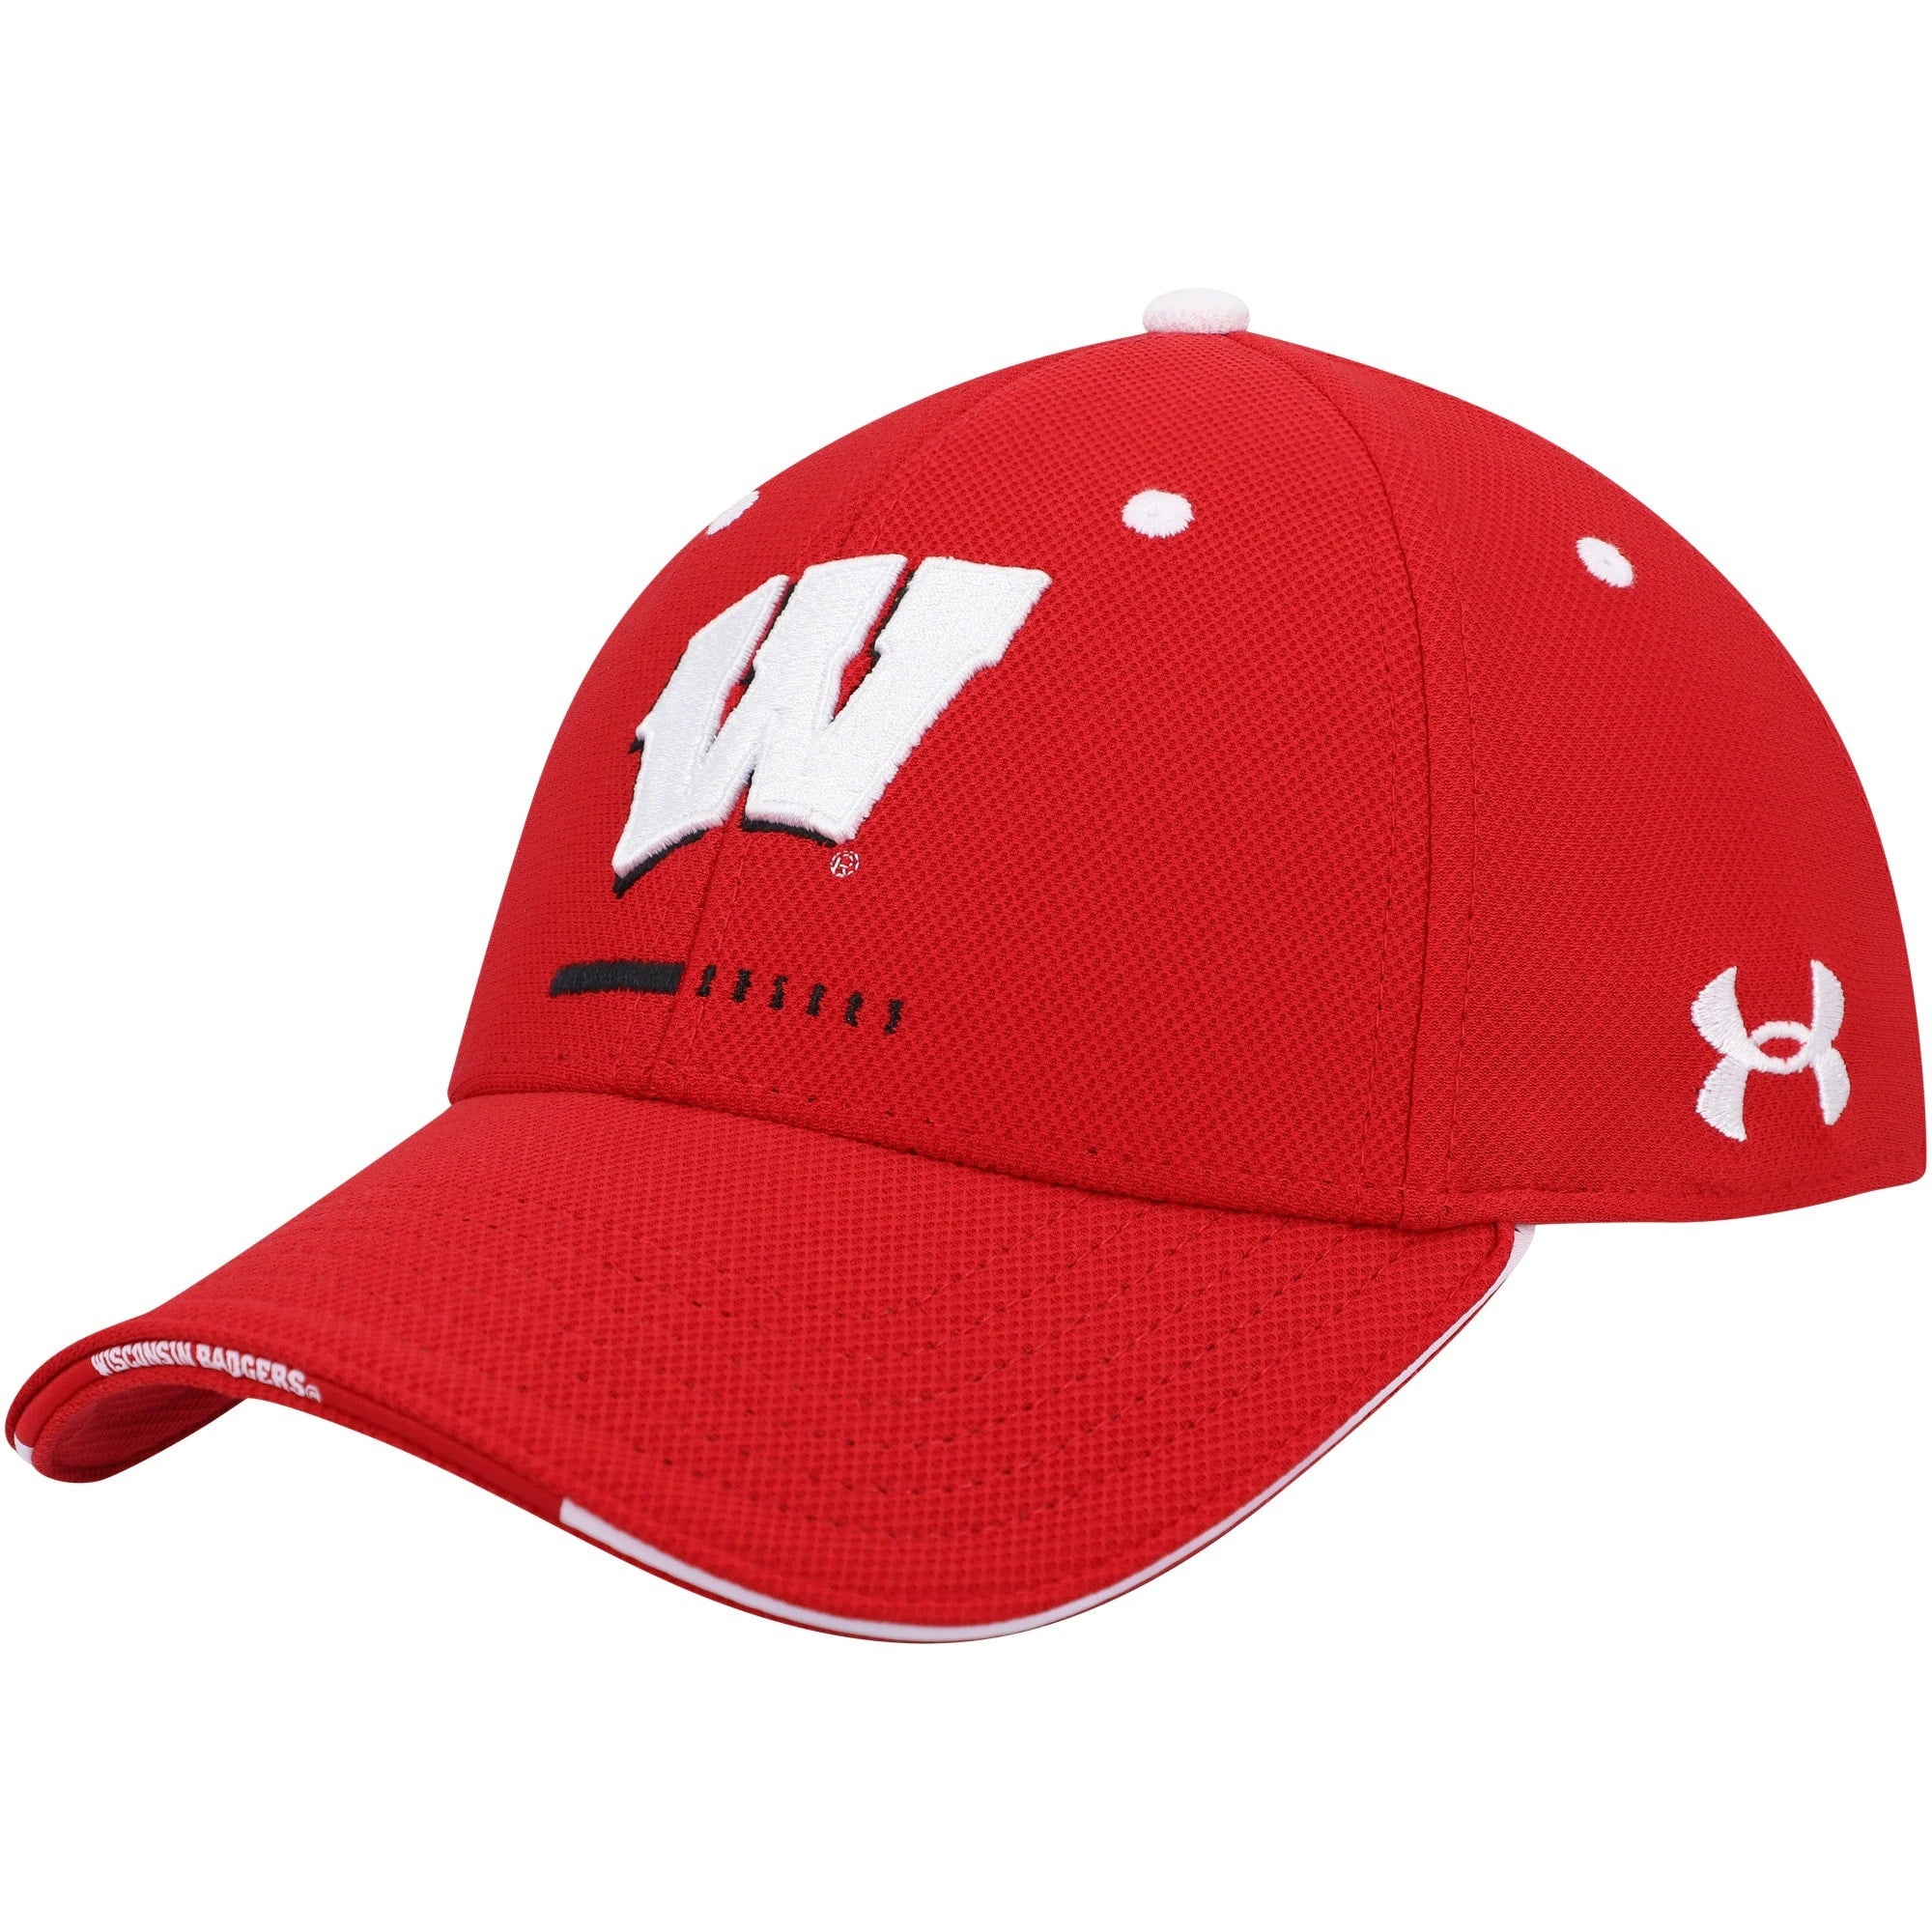 Under Armour Wisconsin Blitzing Accent Performance Flex Hat - Men's